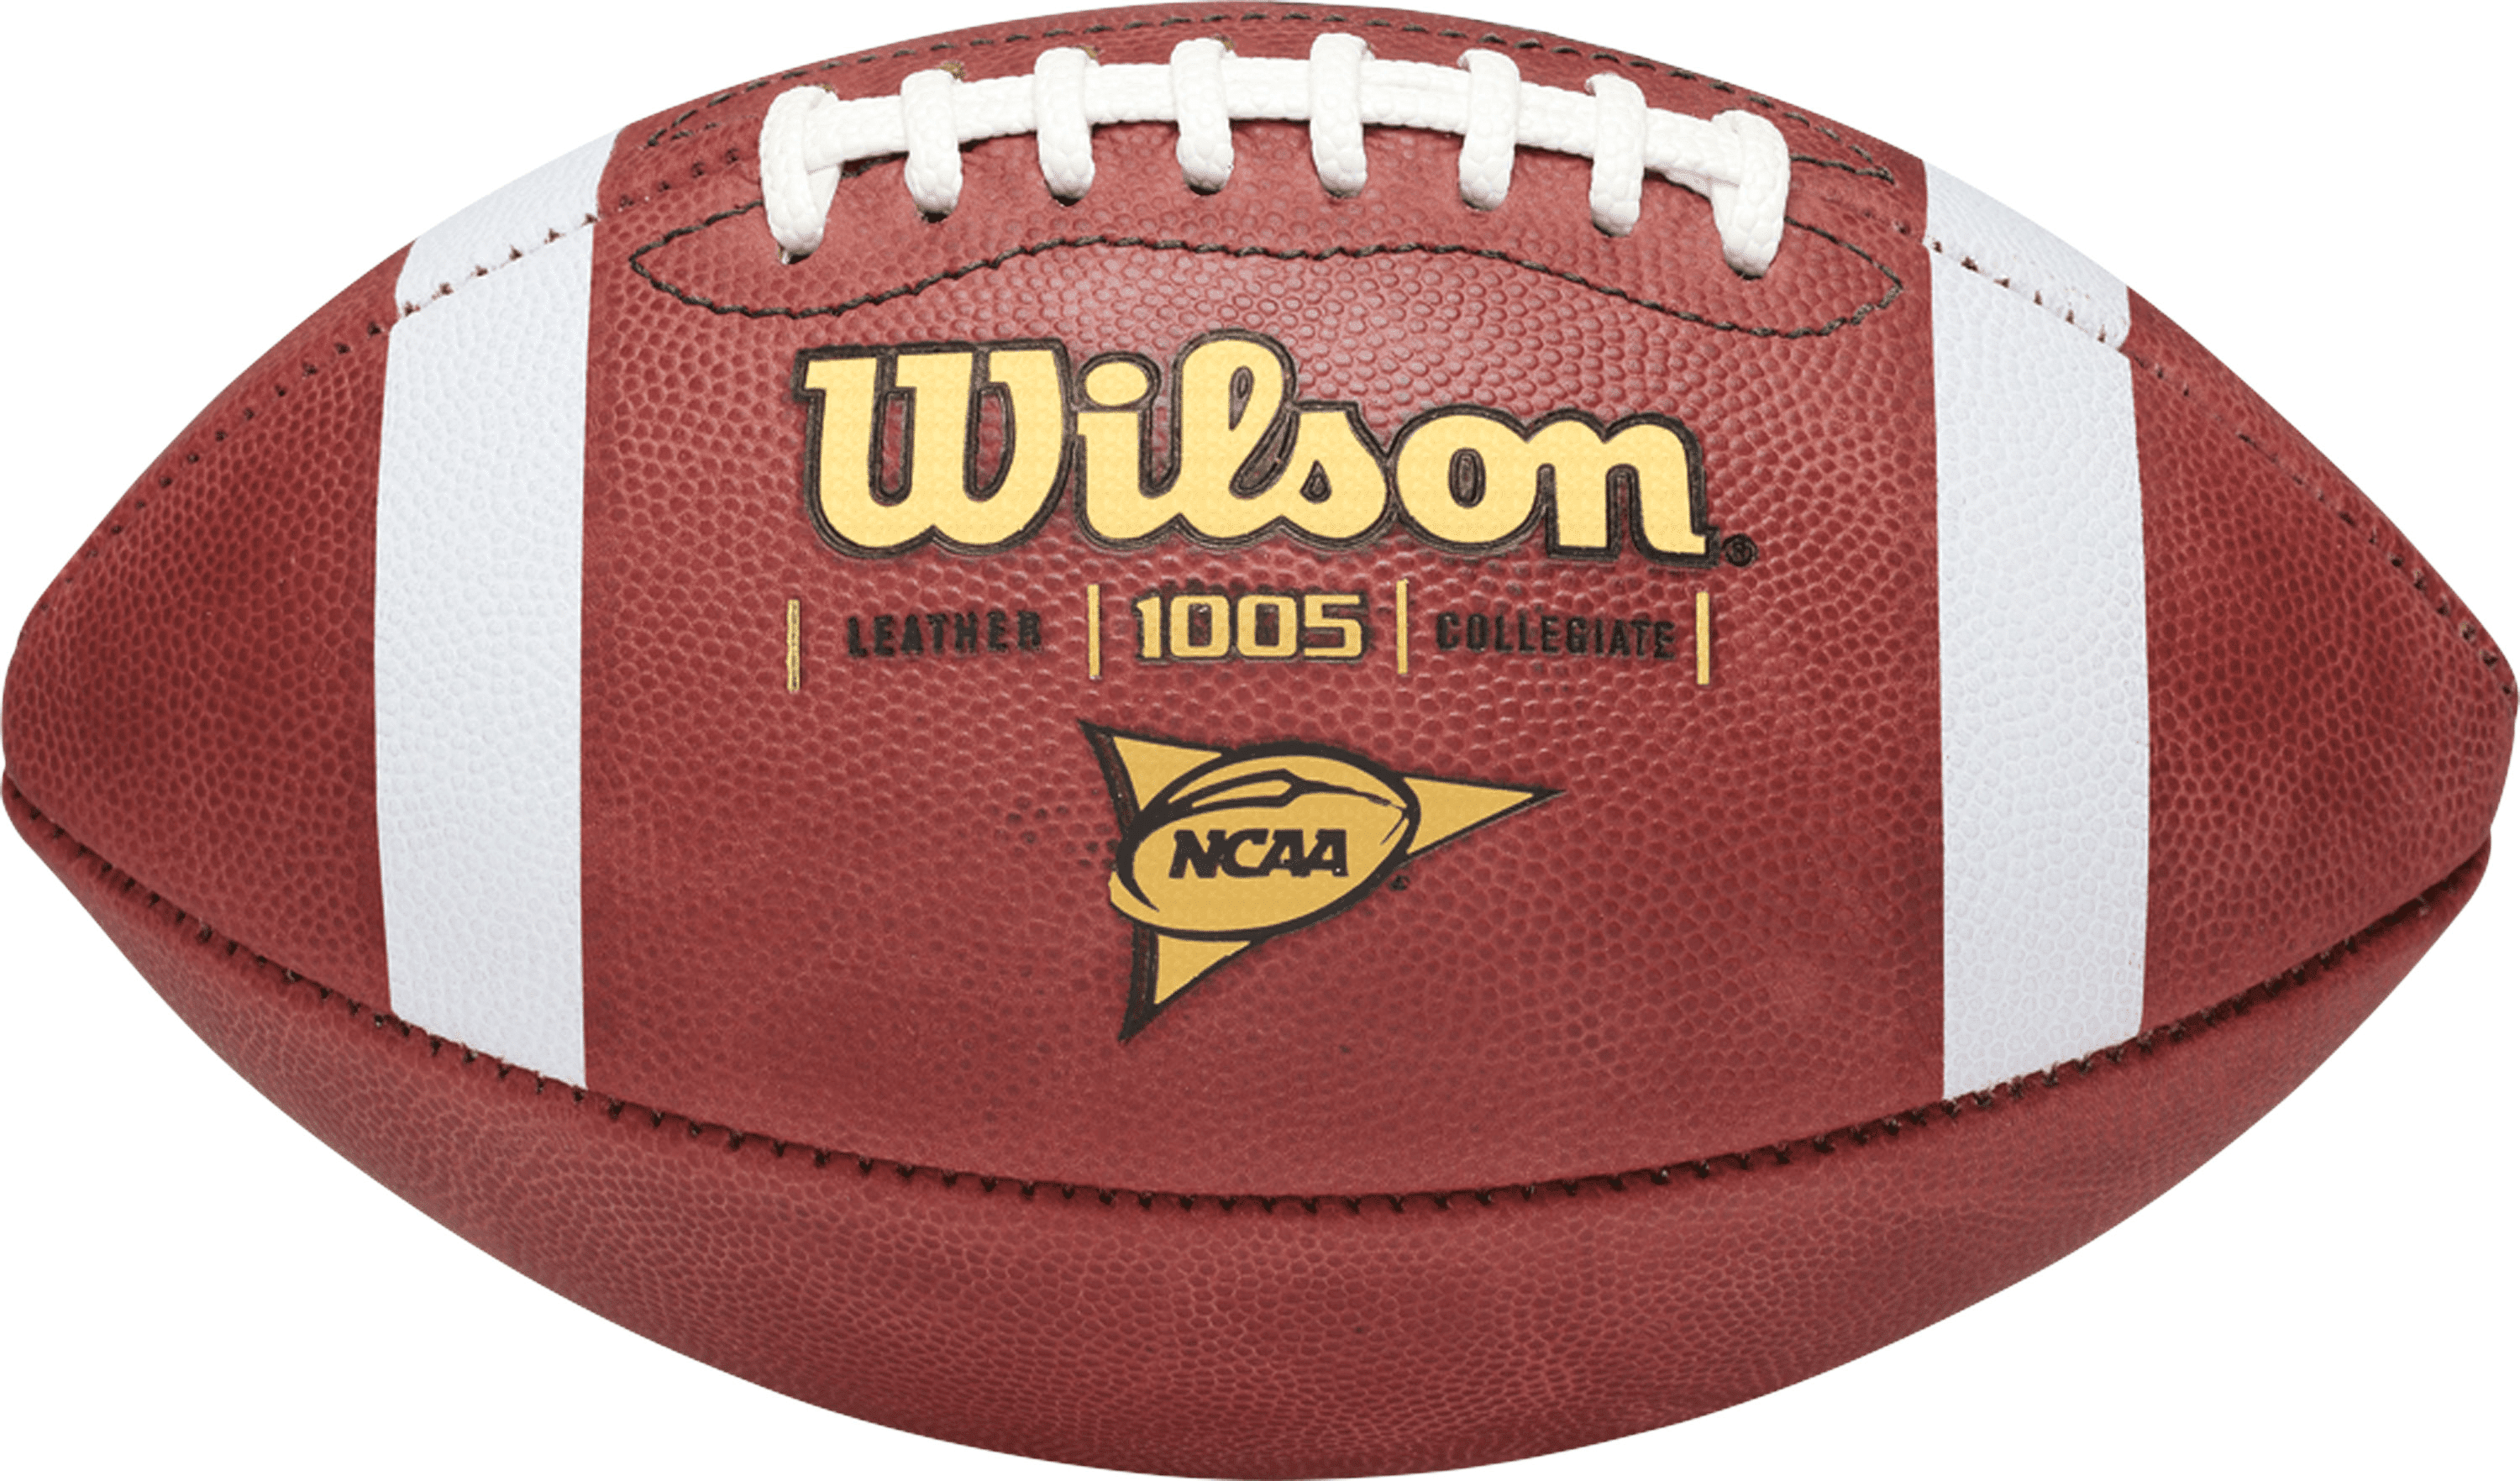 Wilson GST Football Bladder & WHITE Lace Repair Kit NCAA College Footballs AFCA 